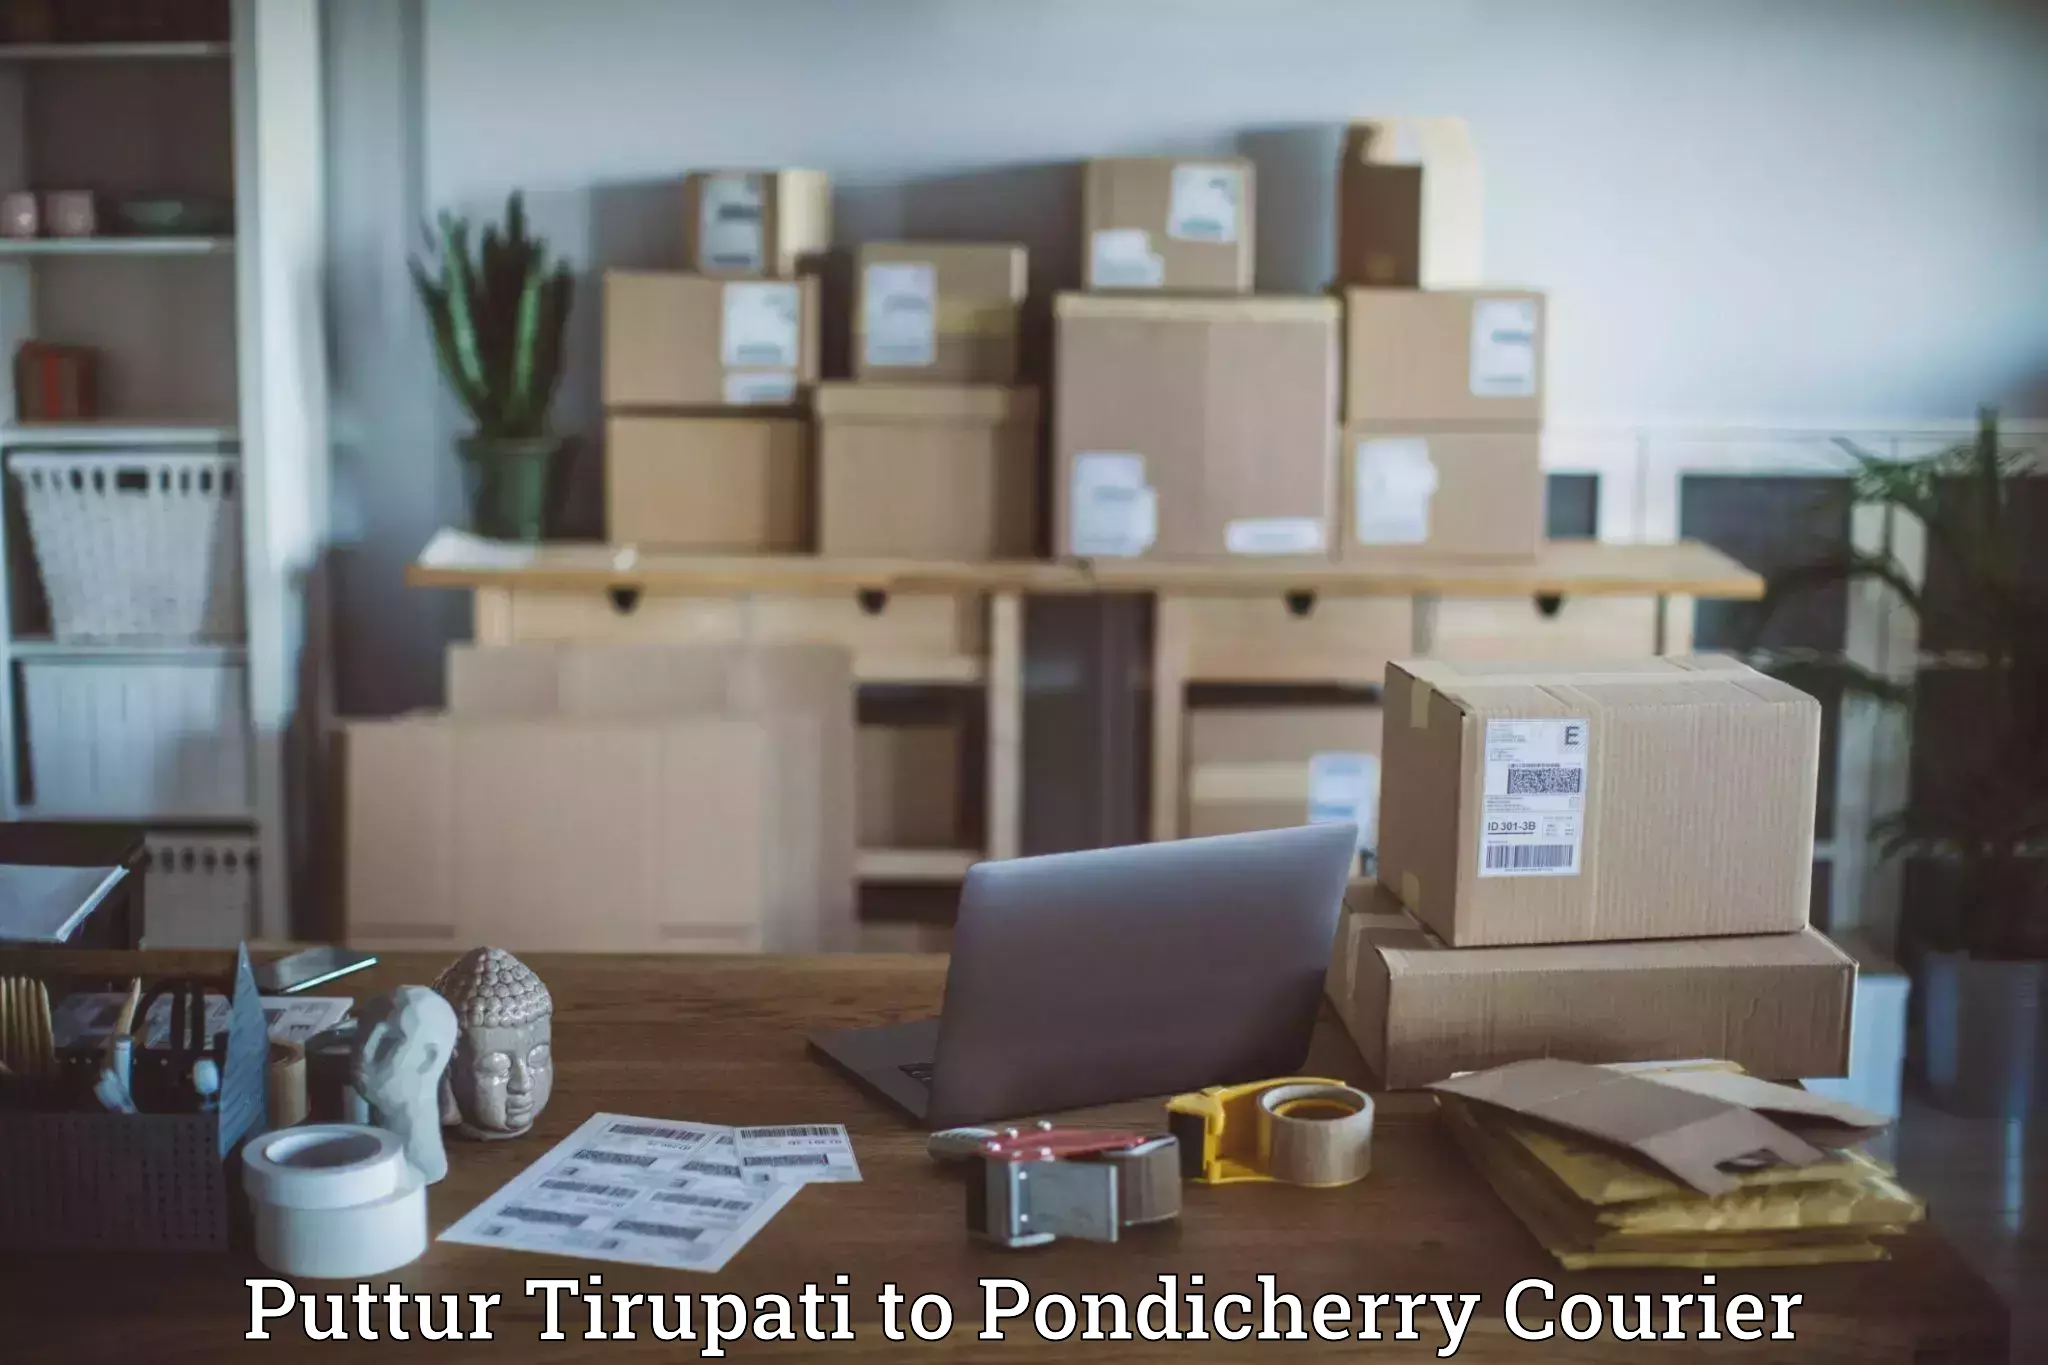 Round-the-clock parcel delivery Puttur Tirupati to Pondicherry